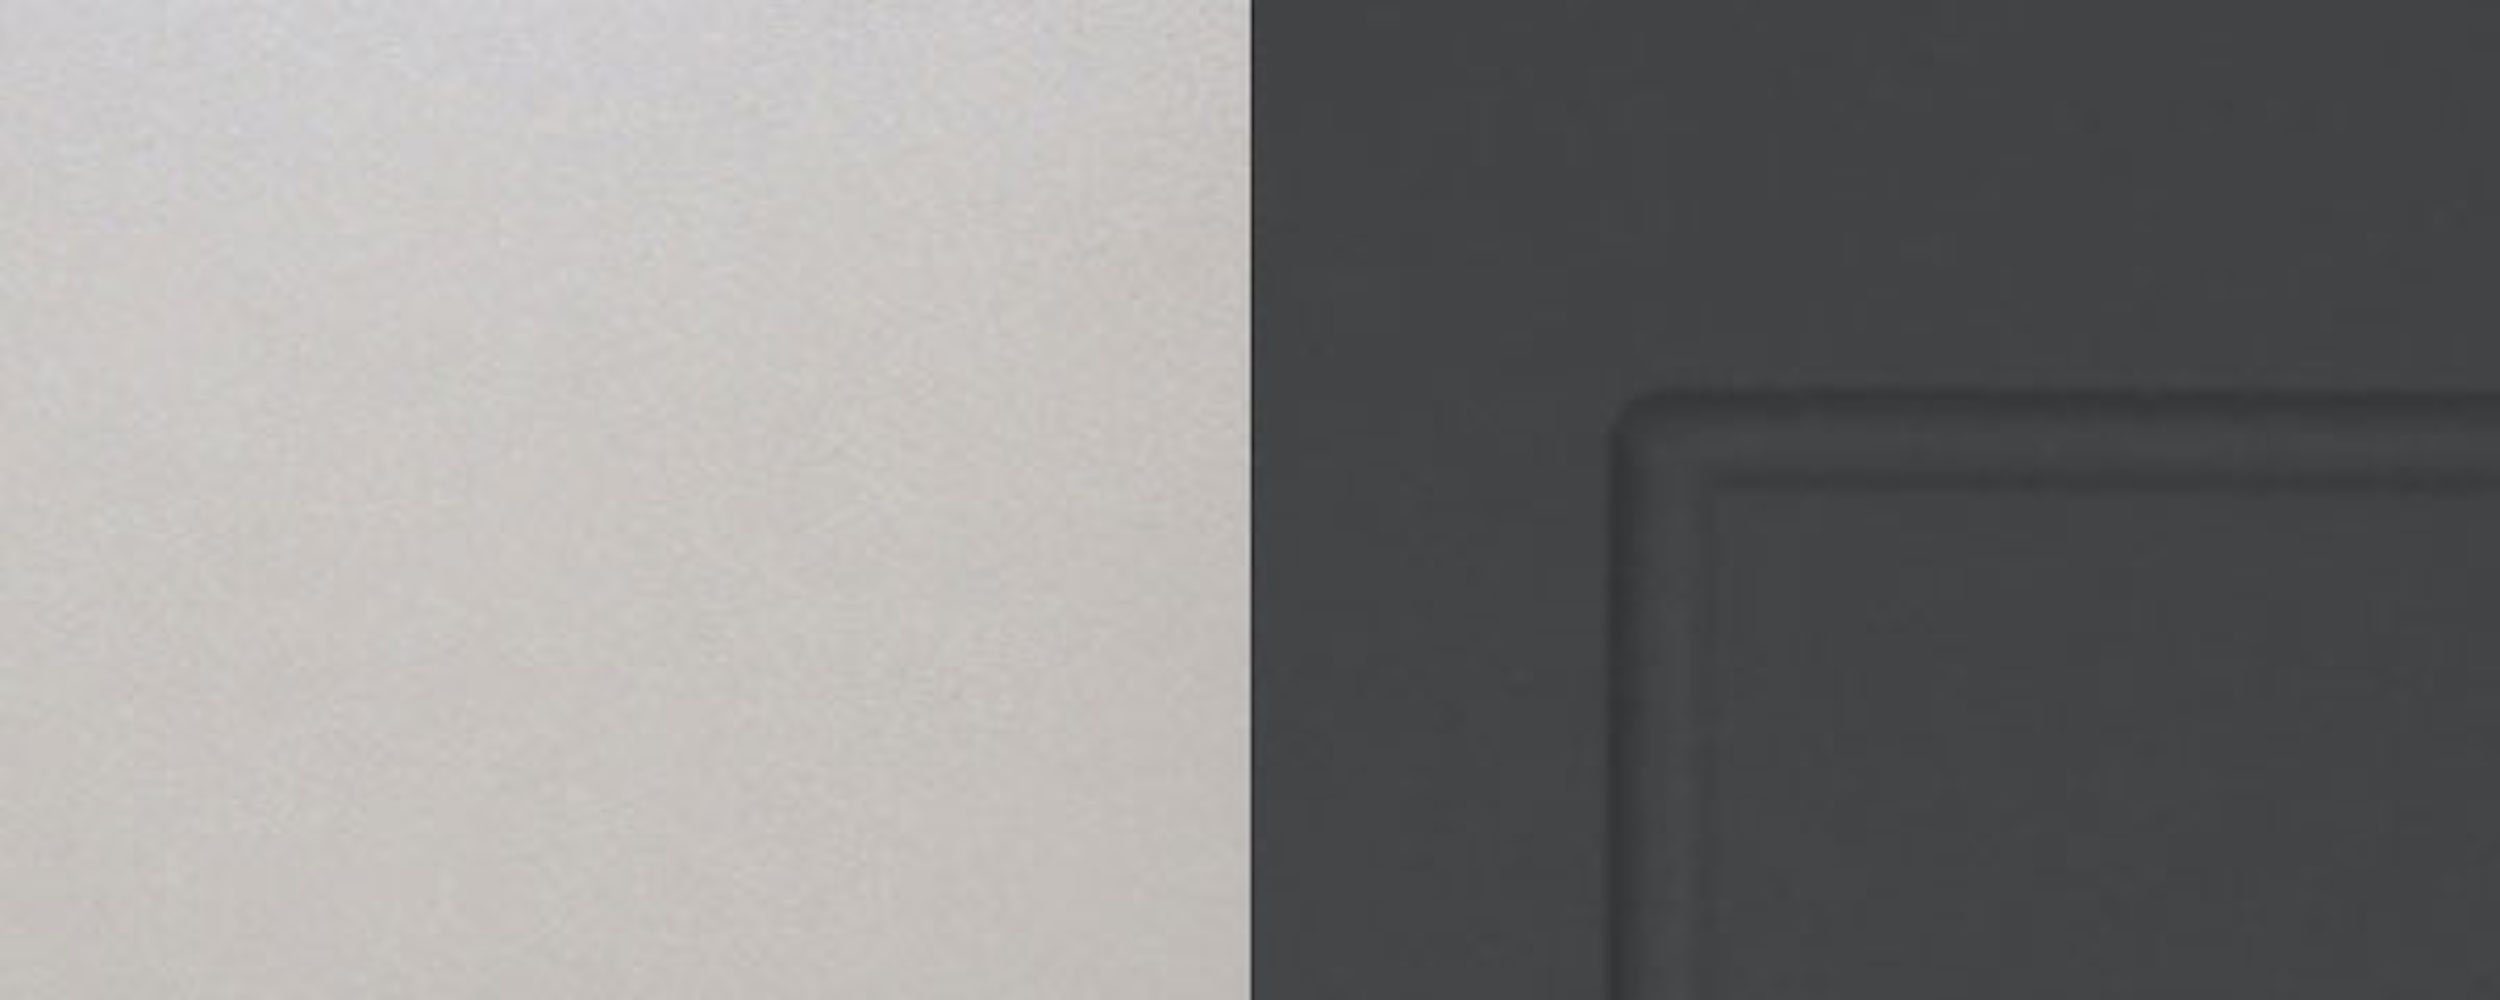 Feldmann-Wohnen Unterschrank Kvantum matt Front- 60cm graphit 1-türig (Kvantum) wählbar Korpusfarbe und